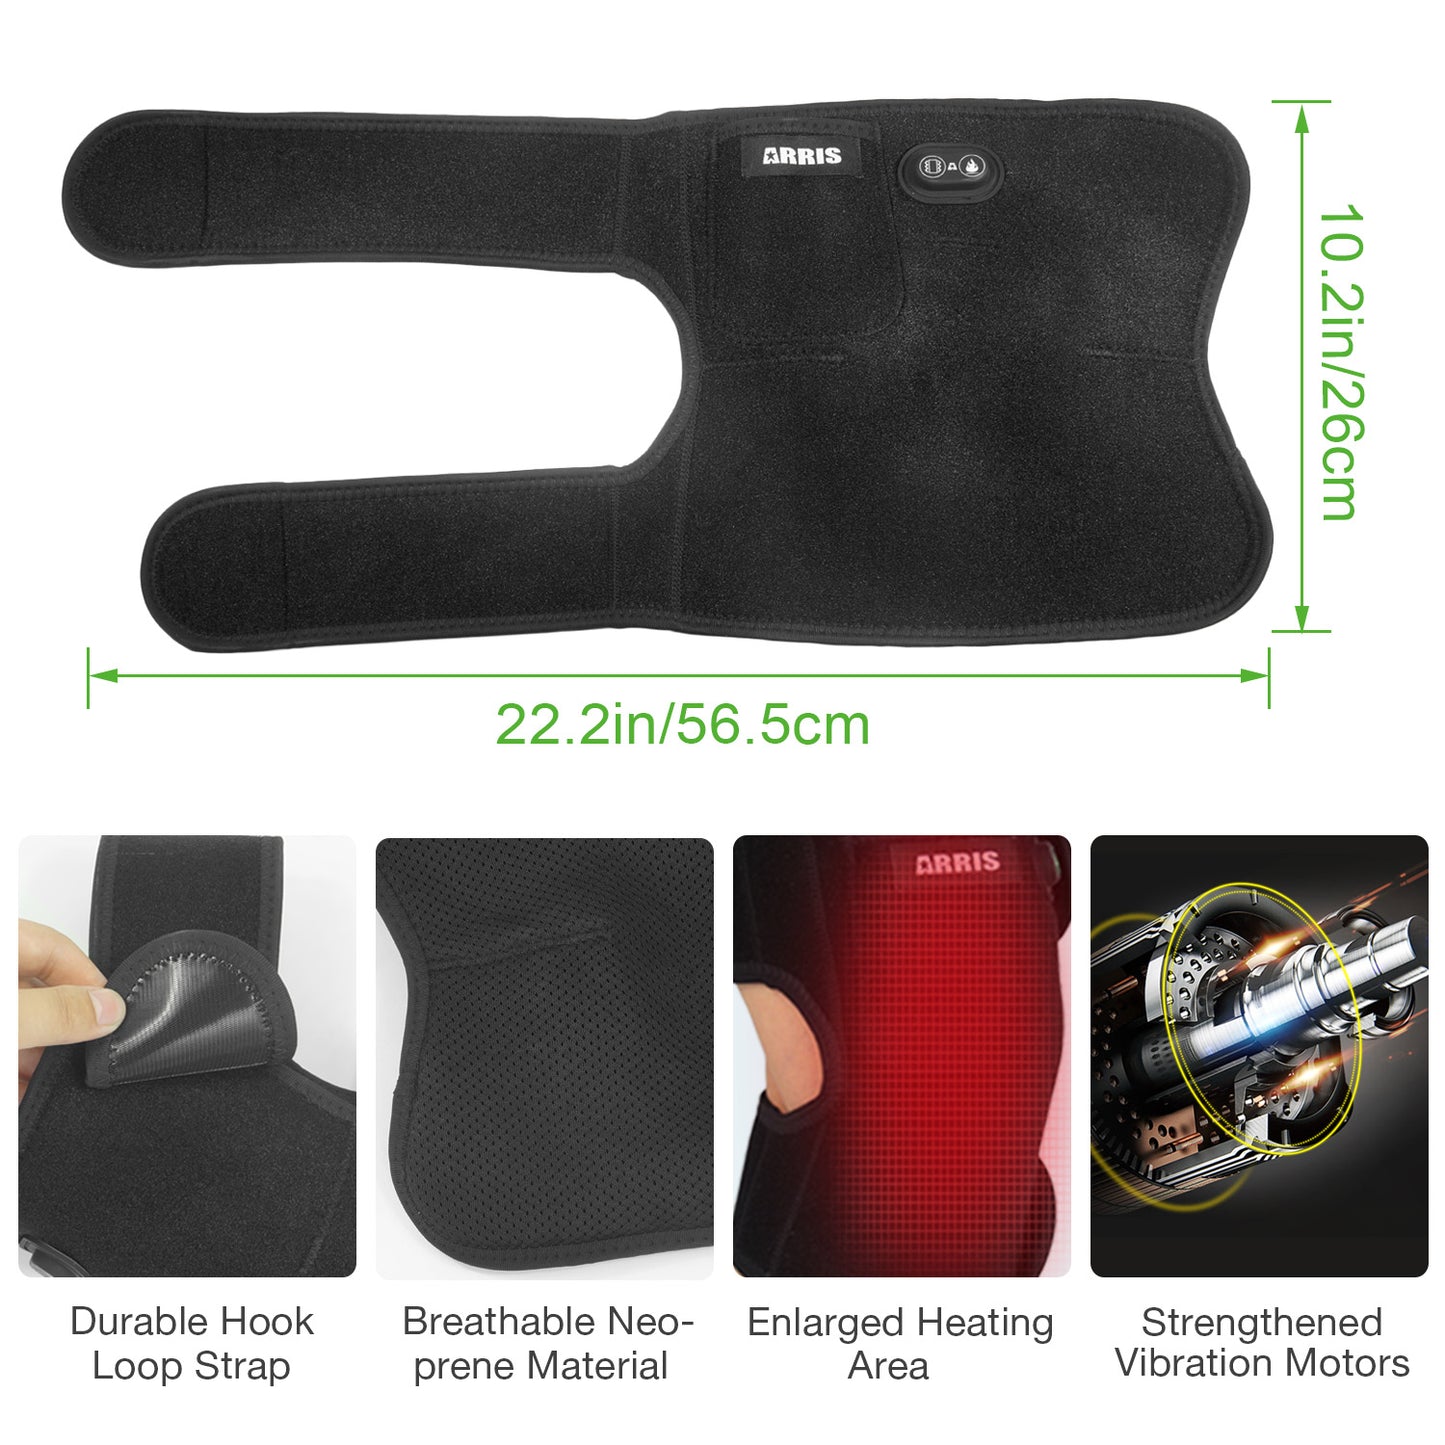 ARRIS 7.4V 4200mah Battery Heating Knee Pad with Massage Vibration motor